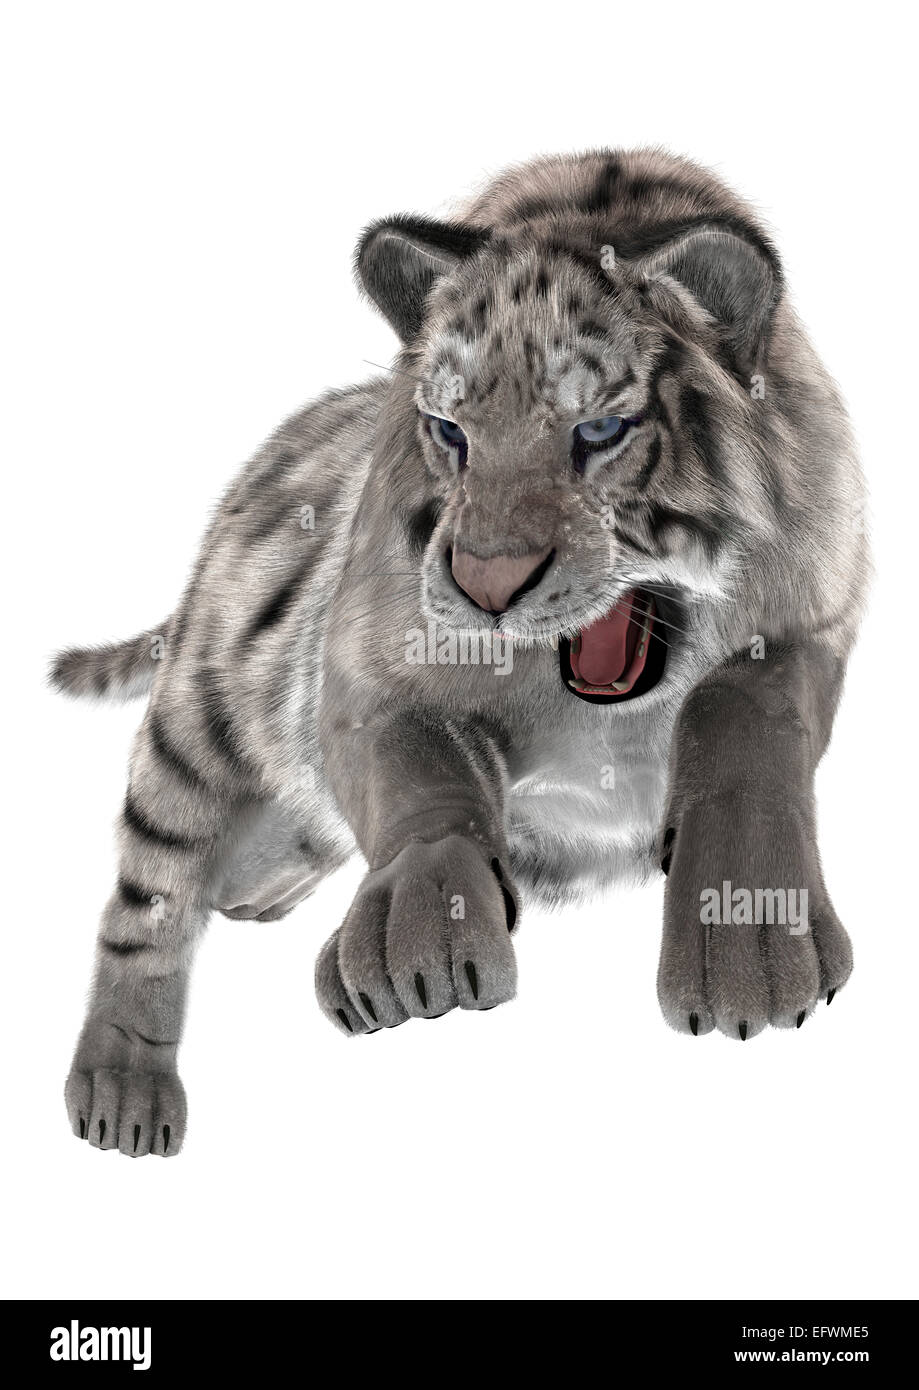 Digitally rendered big wild cat, red tiger, 3D Illustration Stock Photo -  Alamy